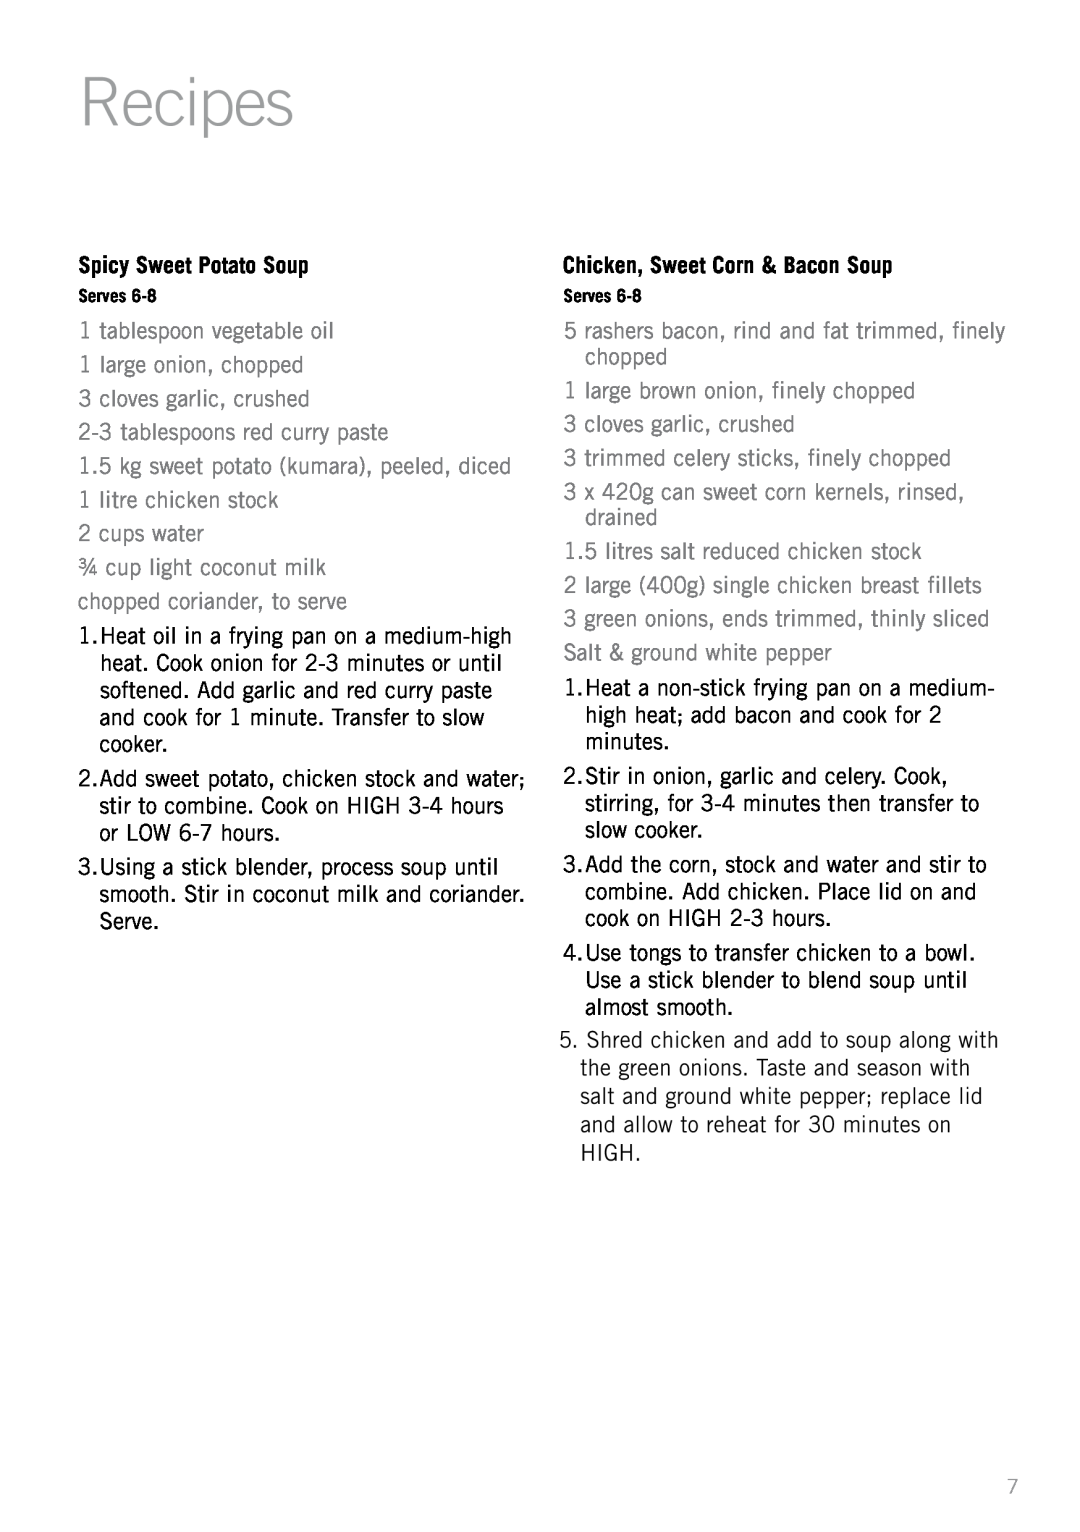 Sunbeam HP5590 manual Recipes, Spicy Sweet Potato Soup, Chicken, Sweet Corn & Bacon Soup 